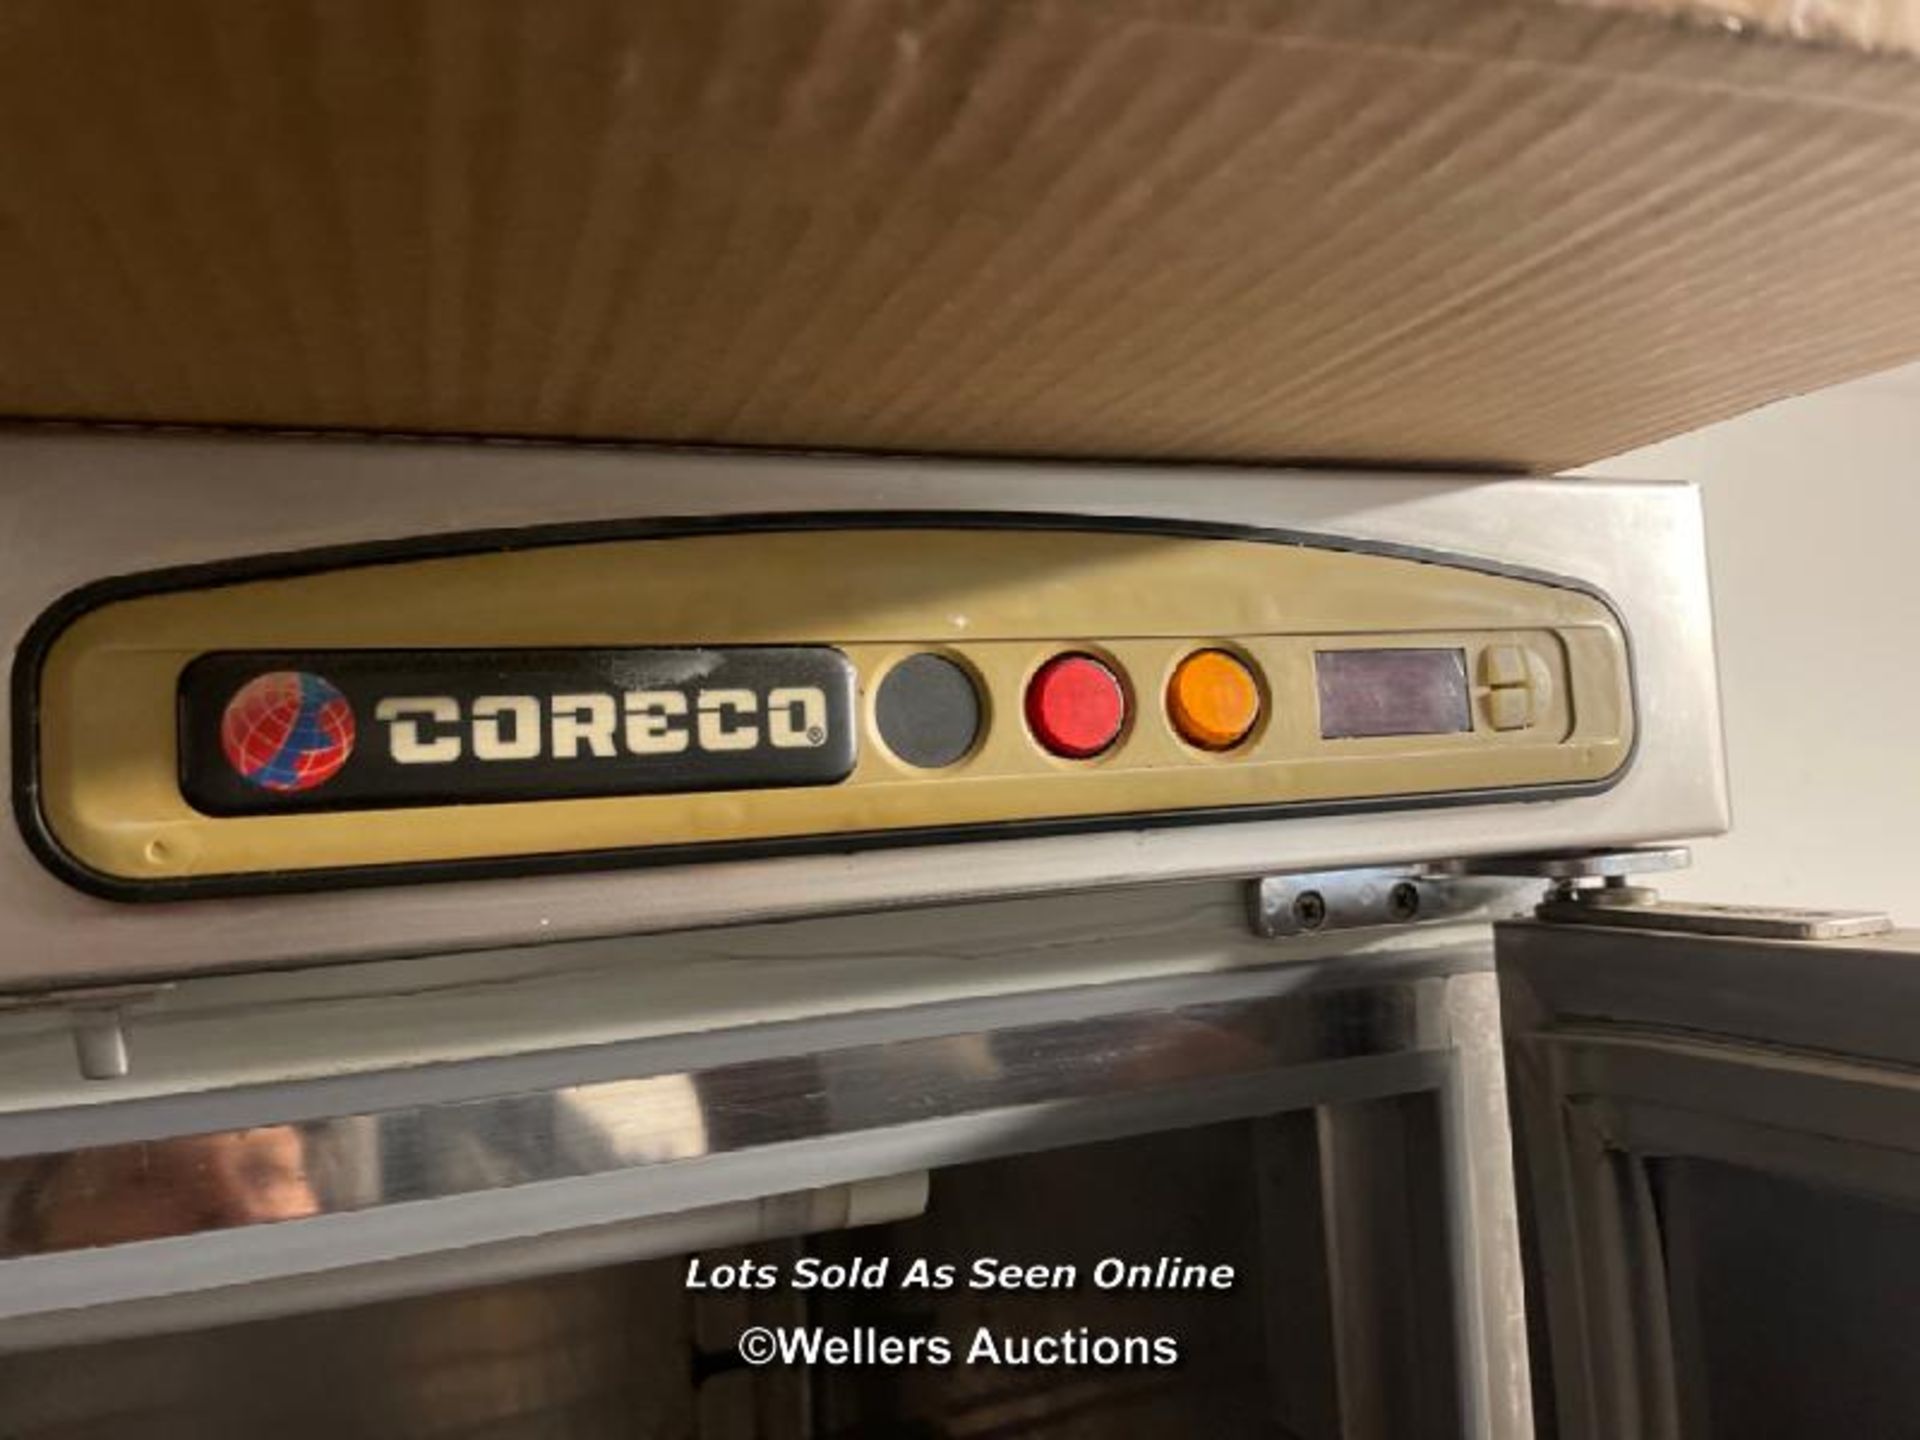 CORECO ACR-751 FRIDGE (DAMAGED POWER CABLE) - 204CM H X 69CM W X 73CM D / THE LOTS IN THIS AUCTION - Image 3 of 3